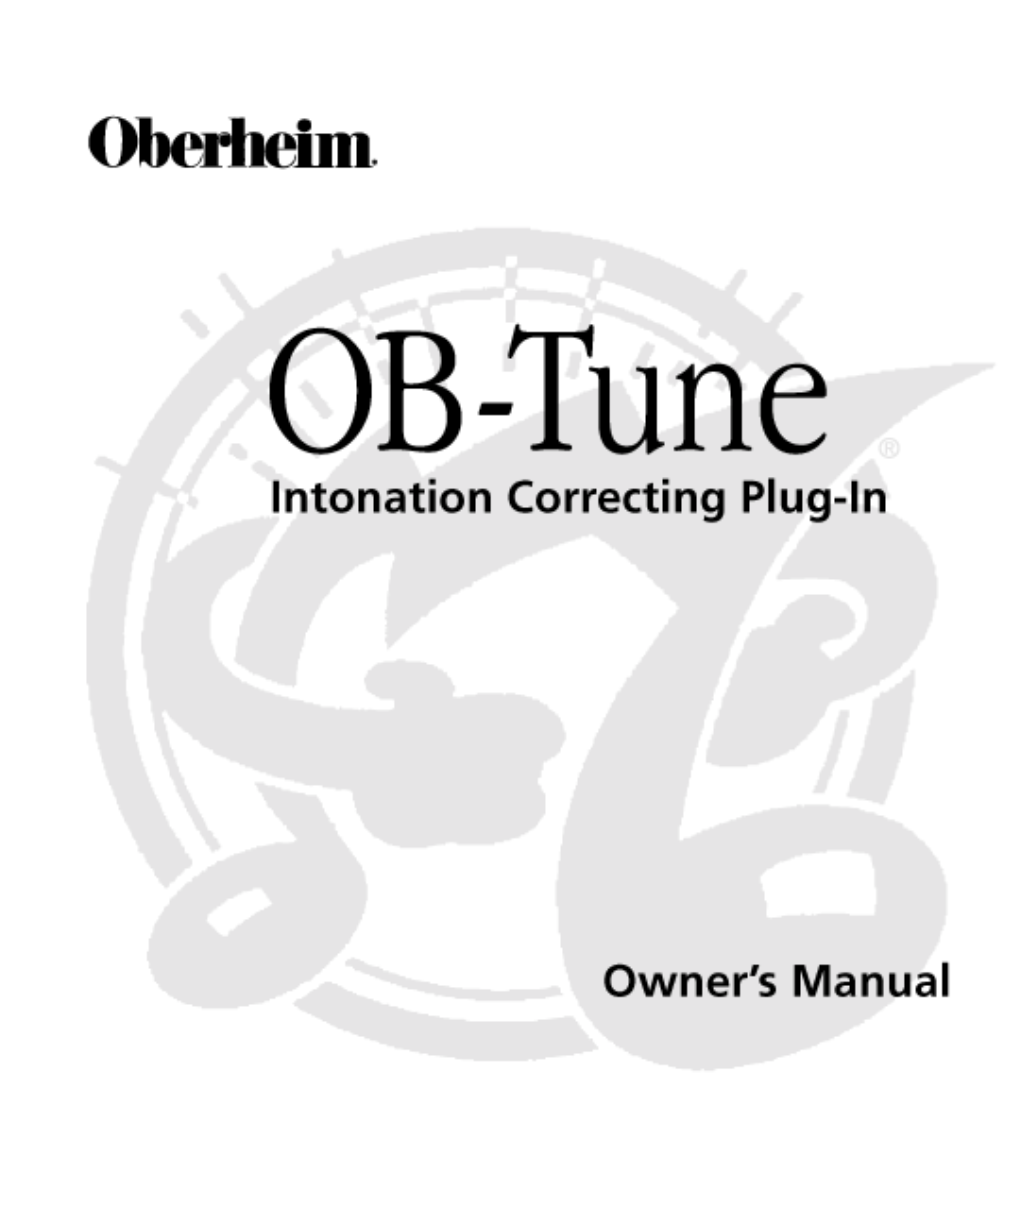 Oberheim OB-Tune Owner's Manual